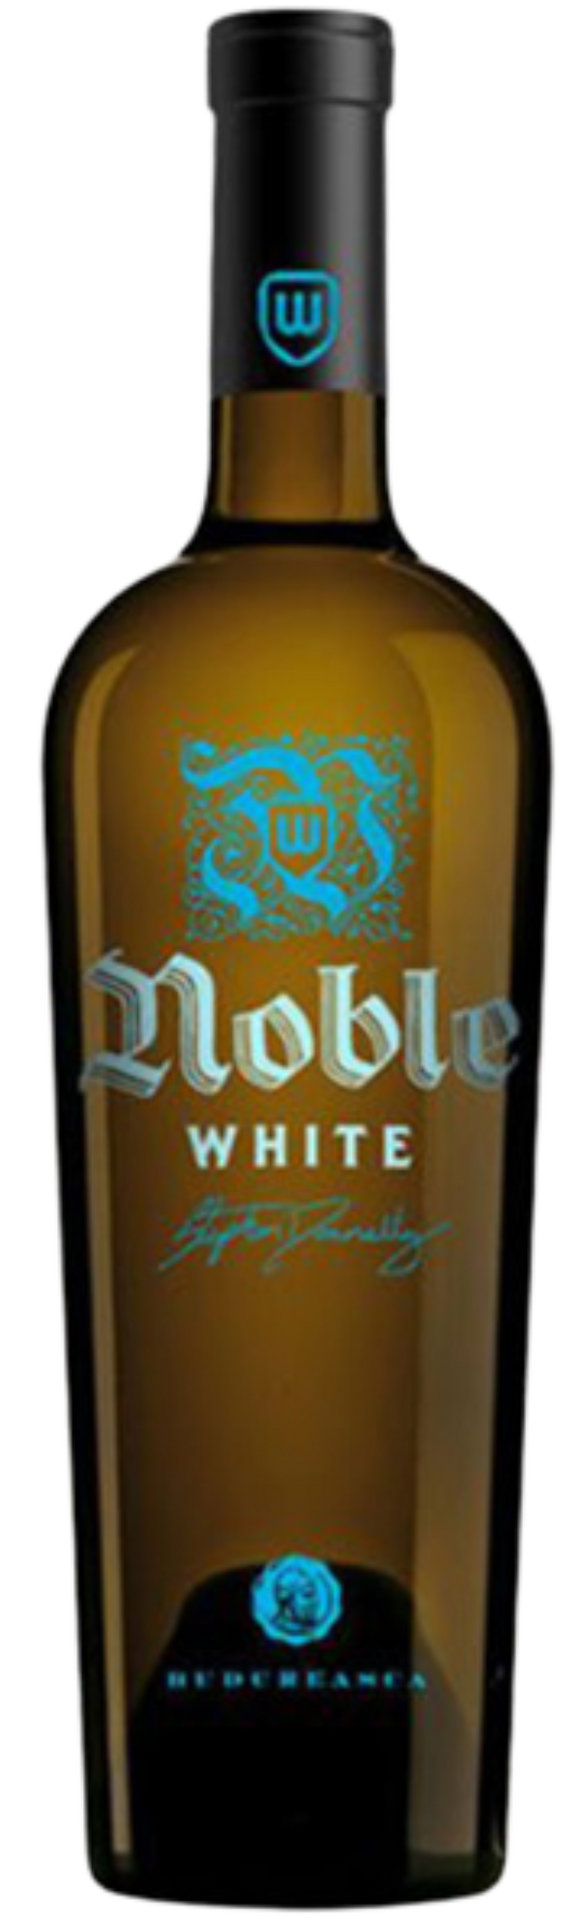 Noble 5 - White - Tezauro - Kwaliteitswijnen uit Roemenië